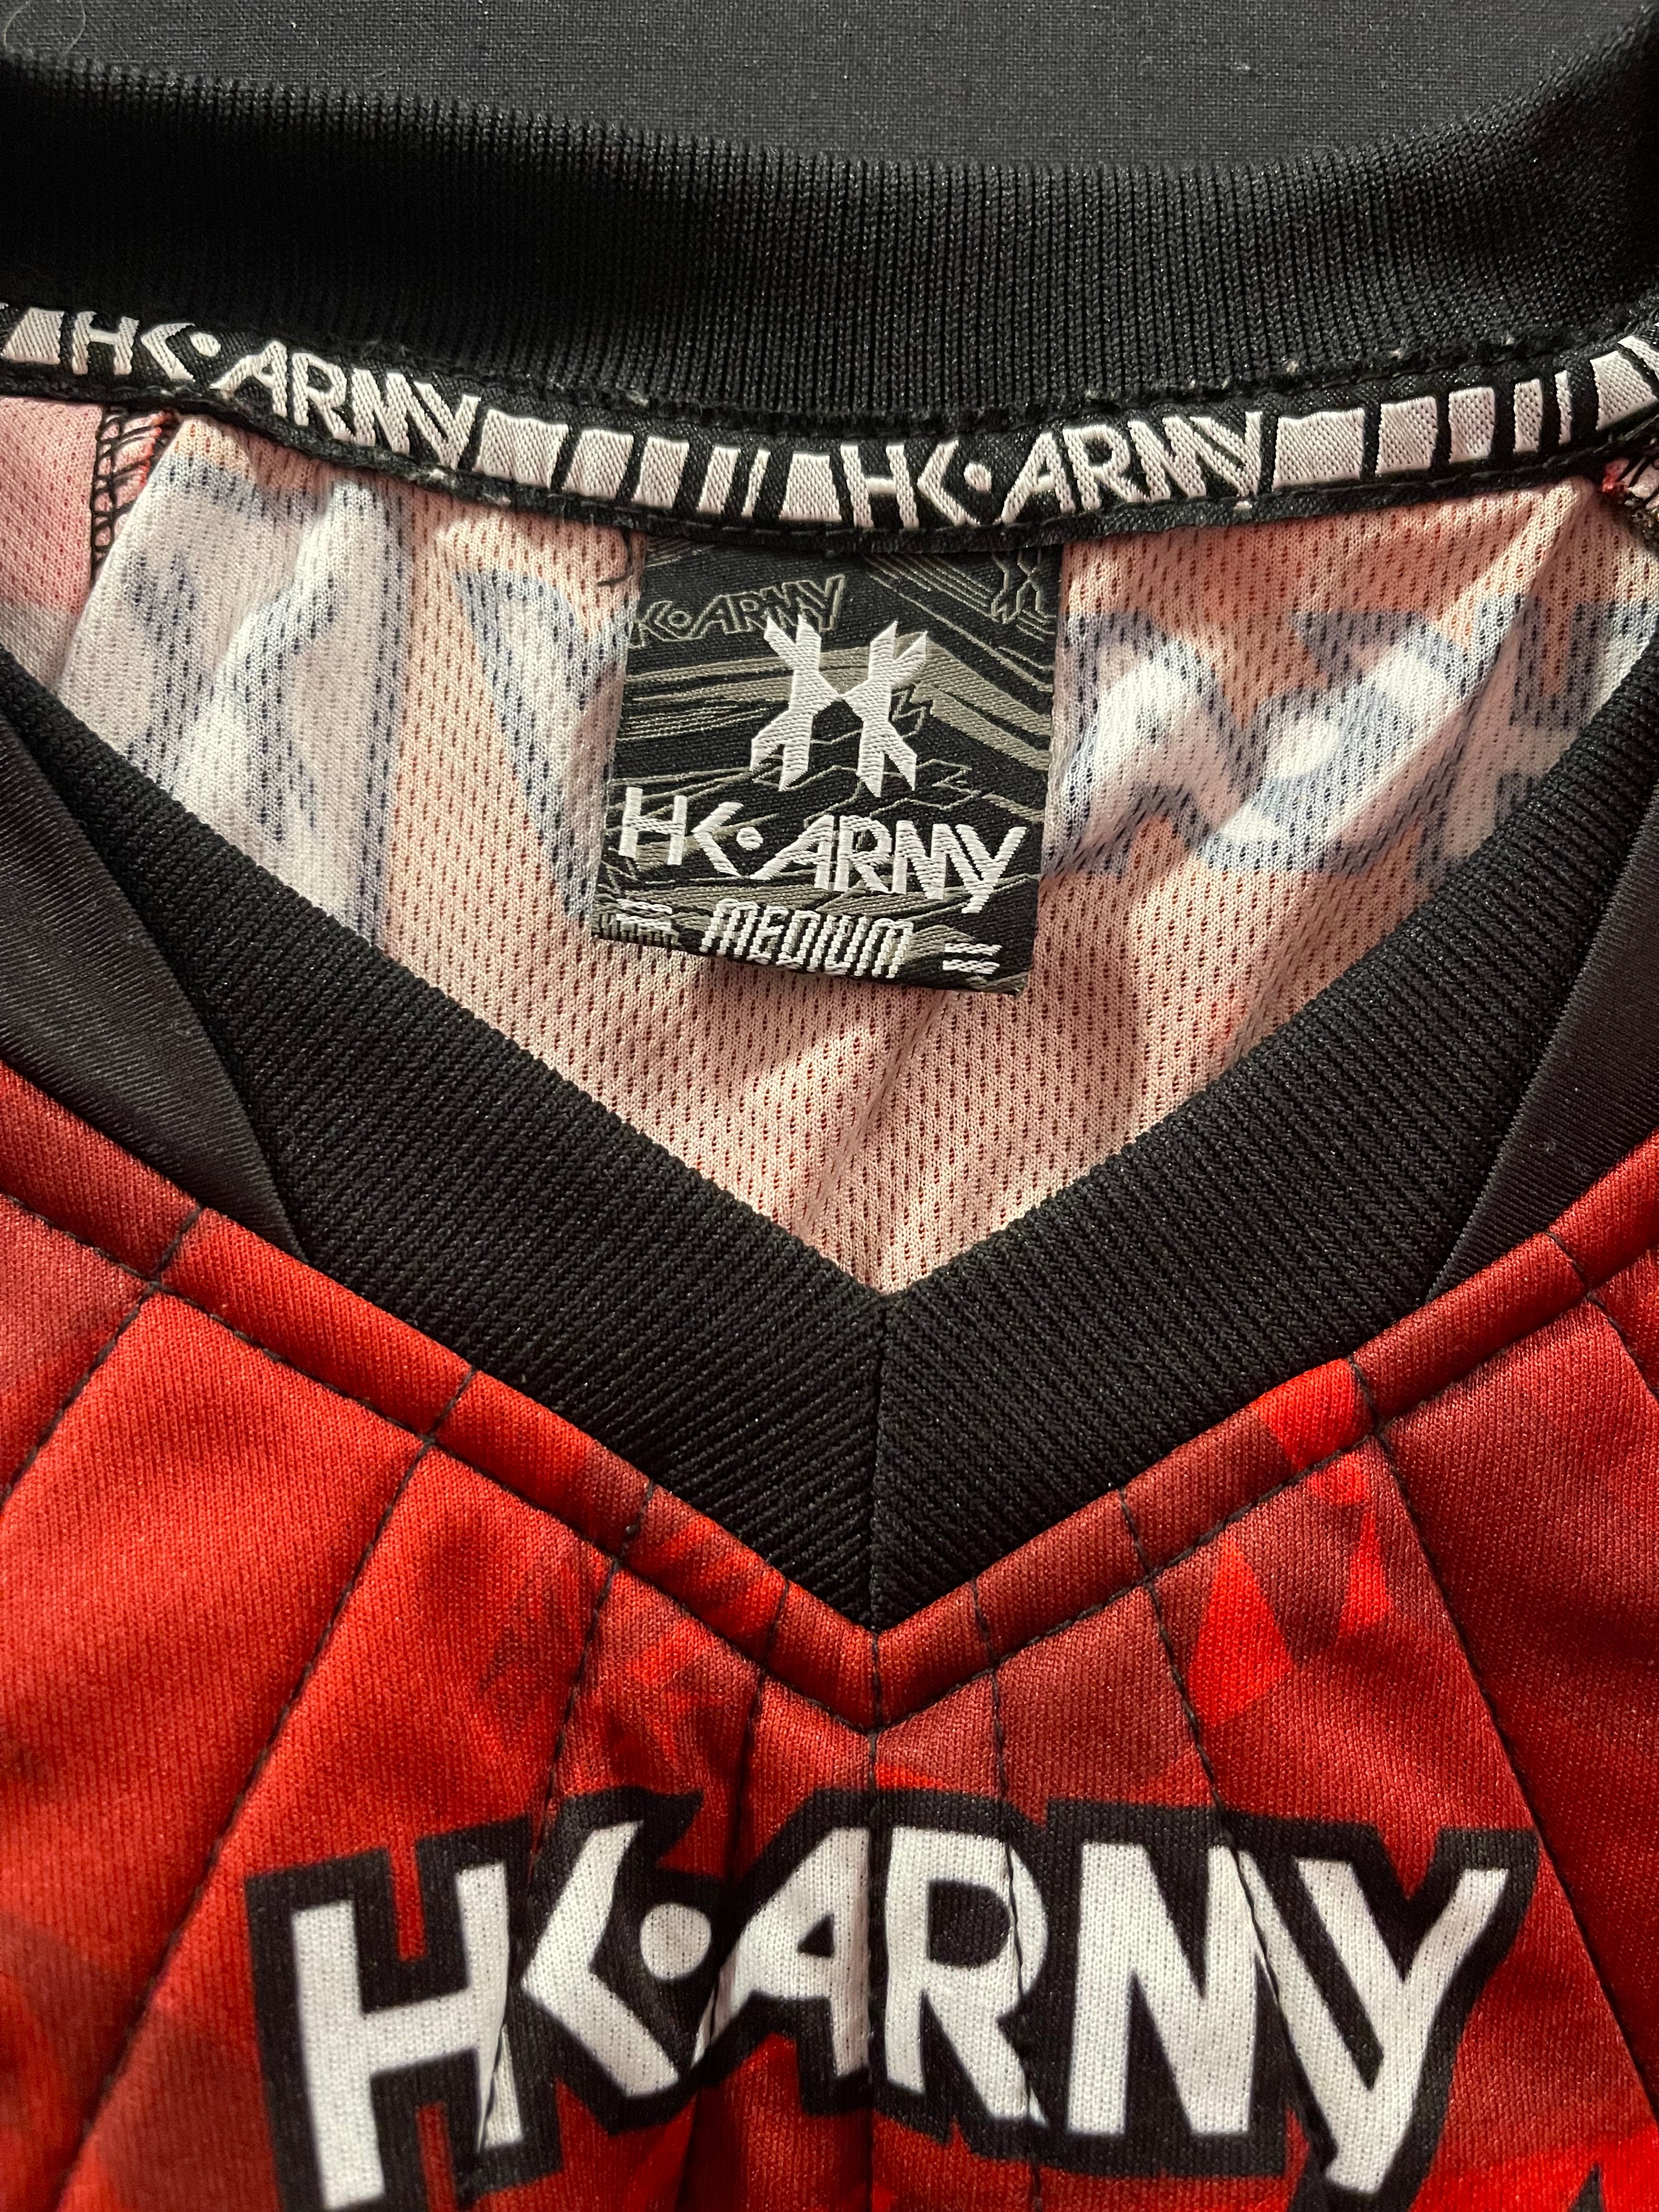 Used HK Army HSTL Jersey - Red - Medium